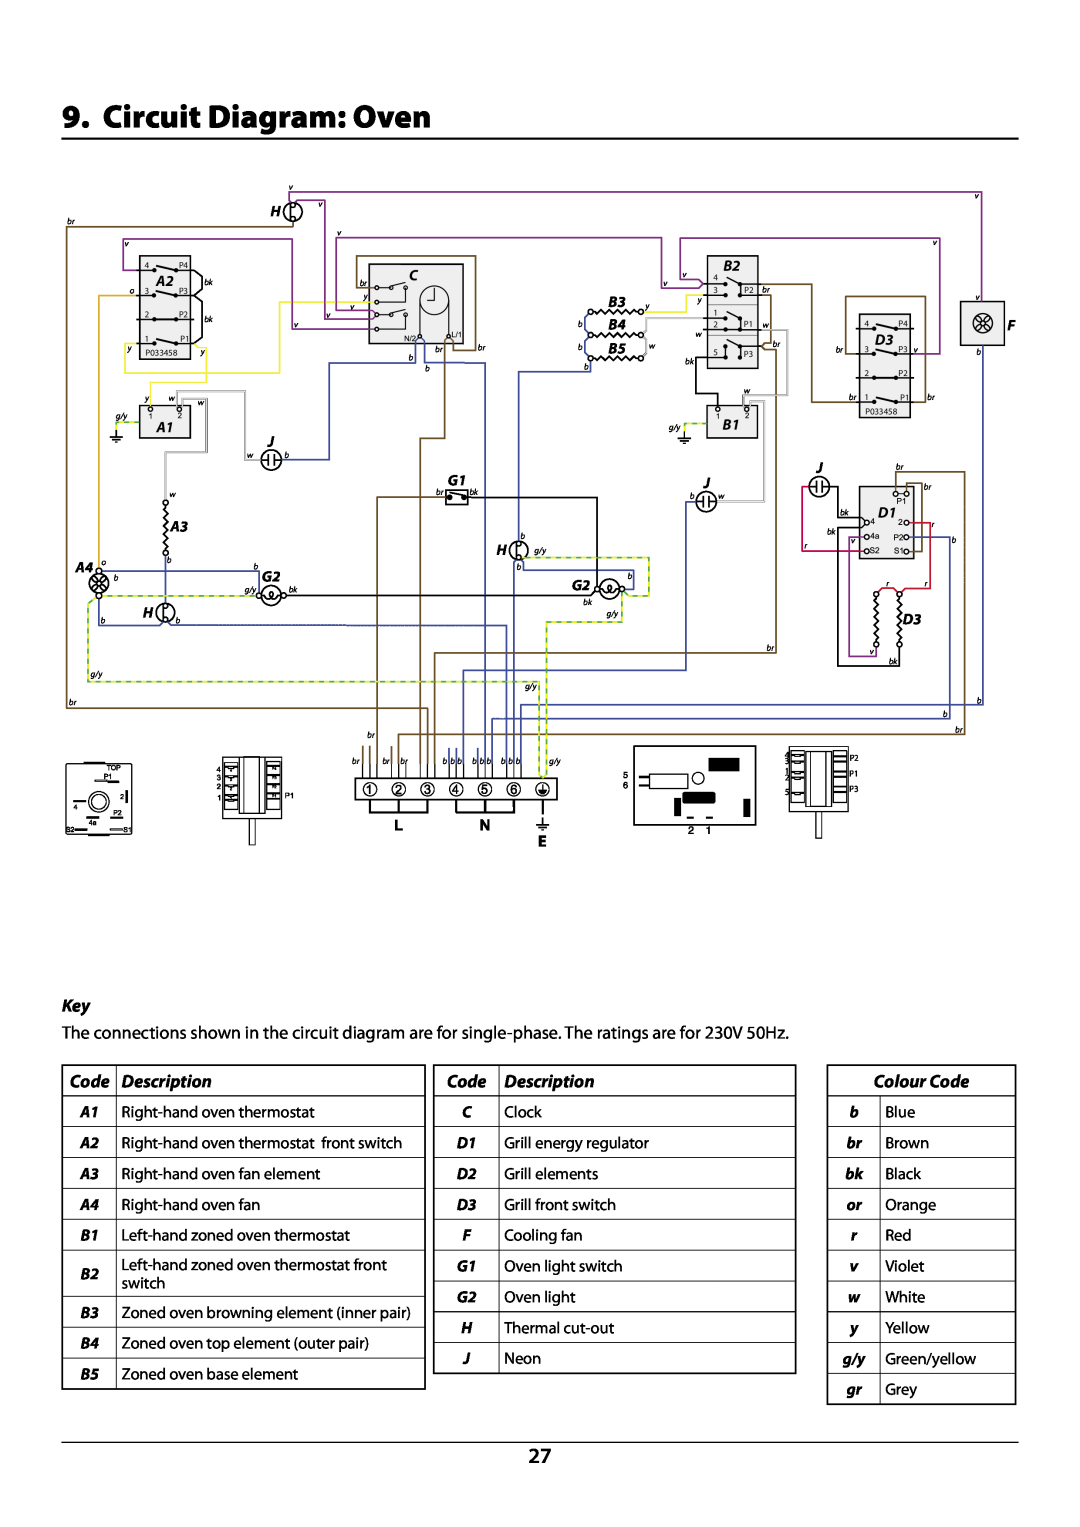 Rangemaster U109948 - 04 manual Circuit Diagram Oven, Description, Colour Code 